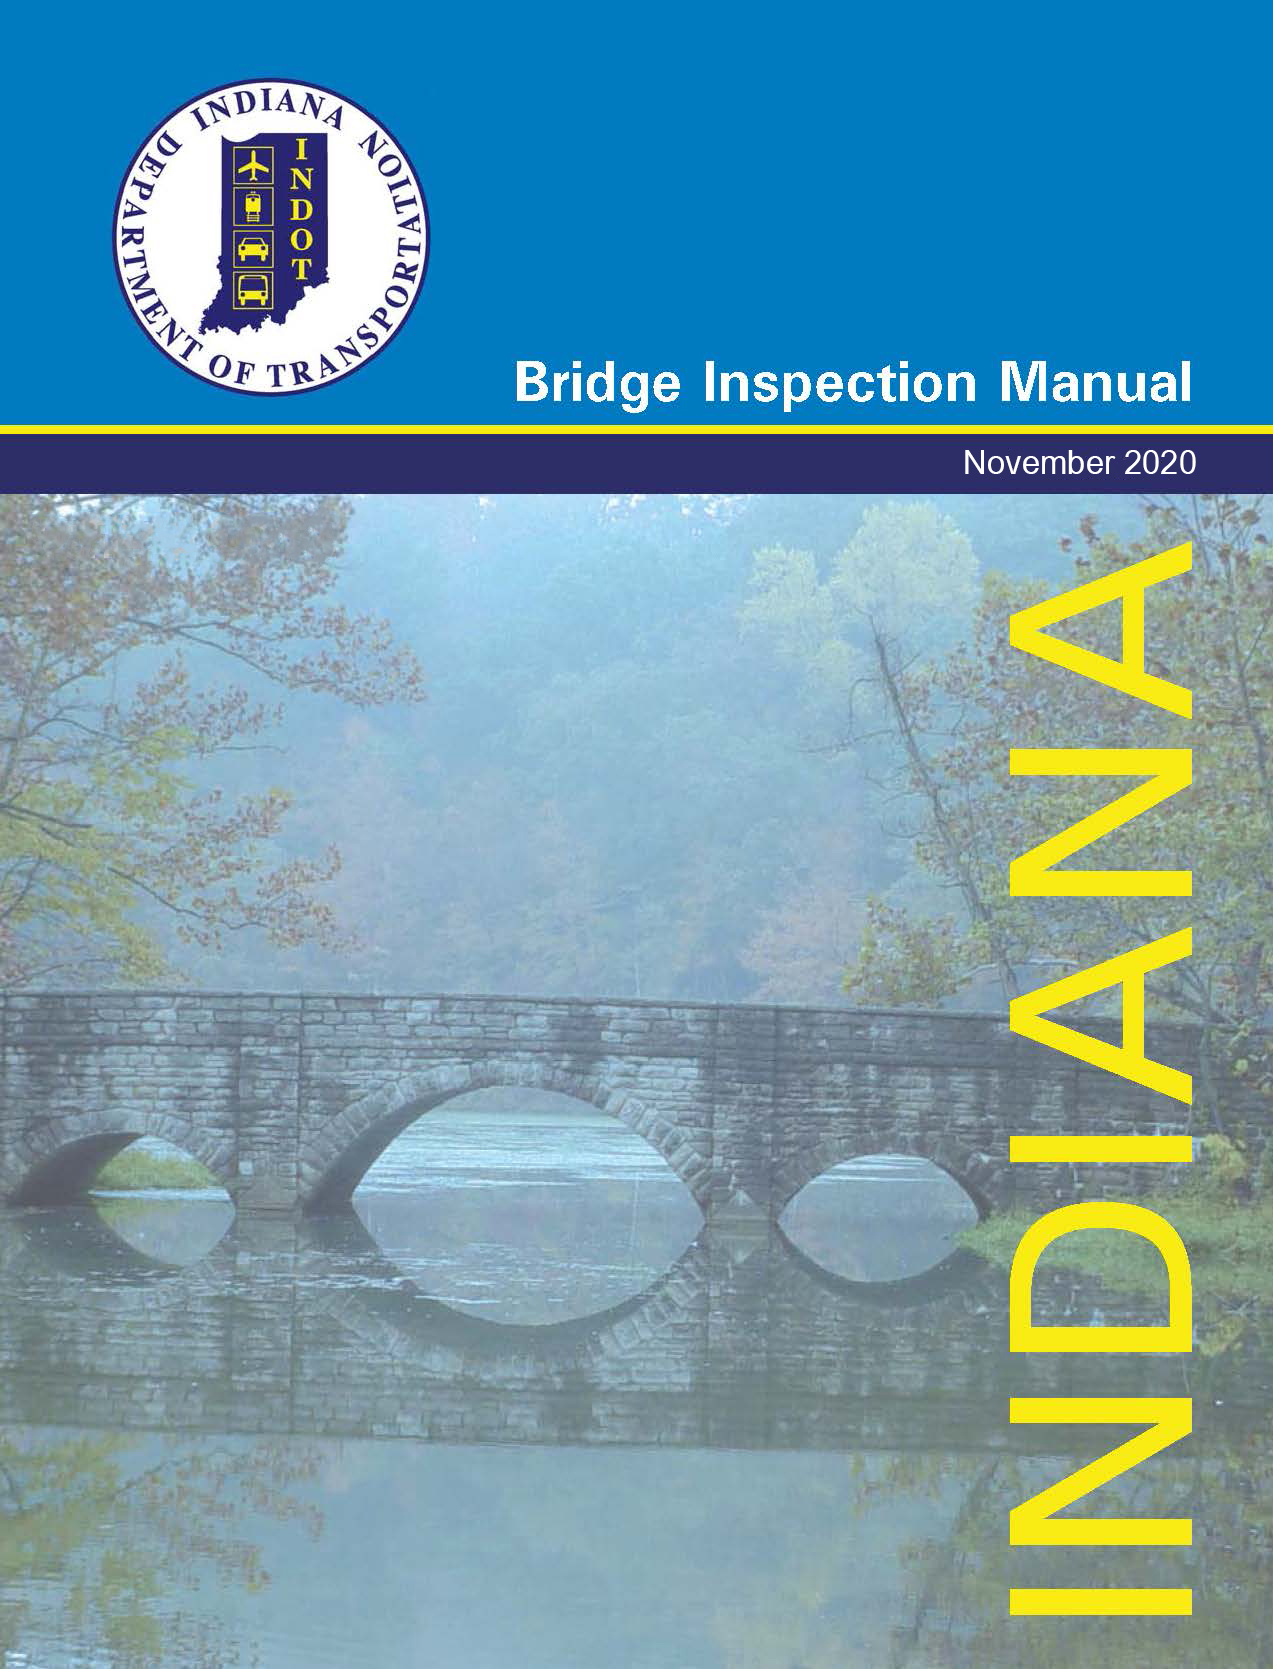 image - Bridge Inspection Manual Cover